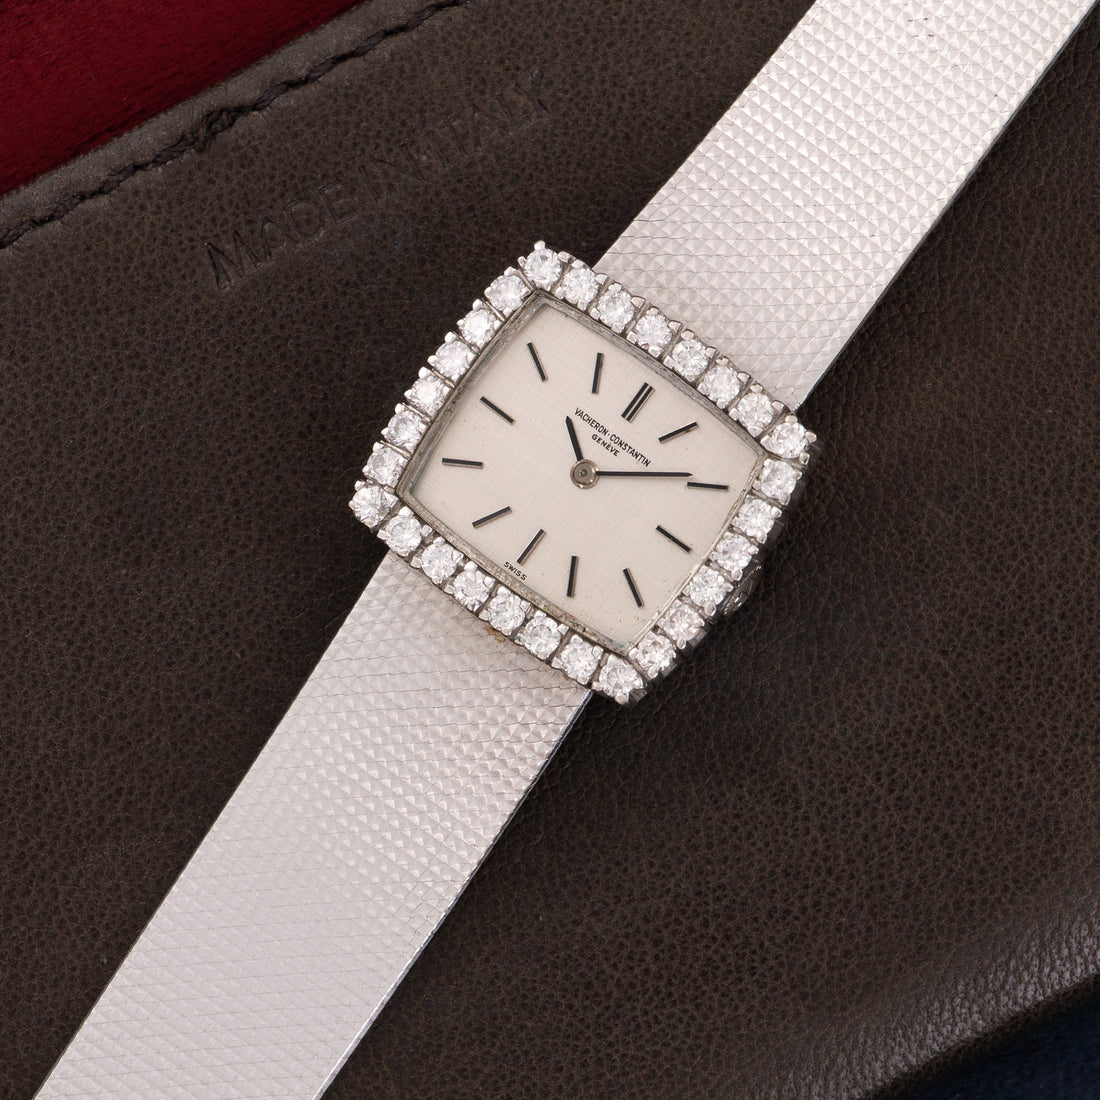 Vacheron Constantin White Gold Diamond Watch